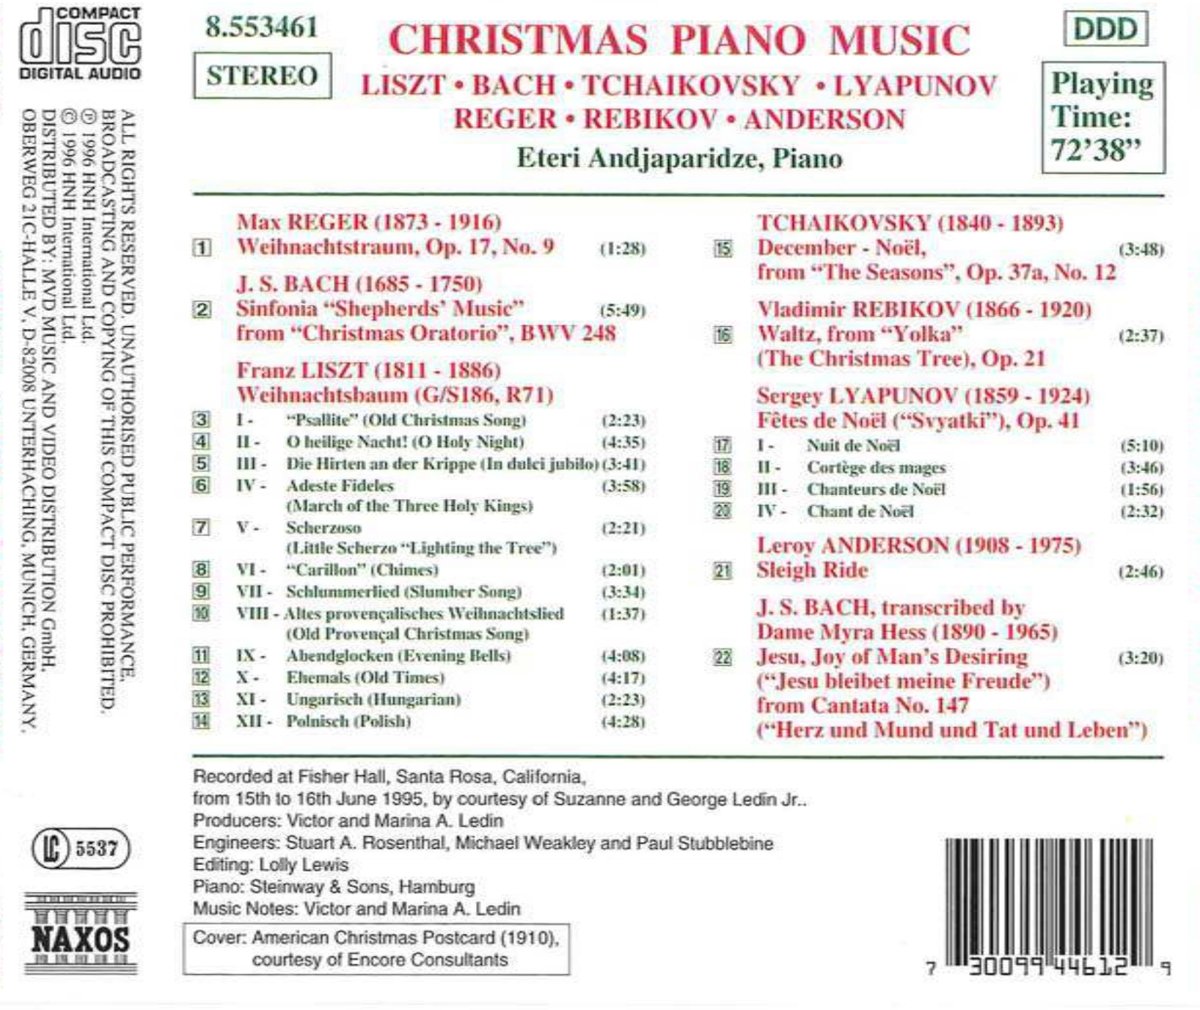 CHRISTMAS PIANO MUSIC